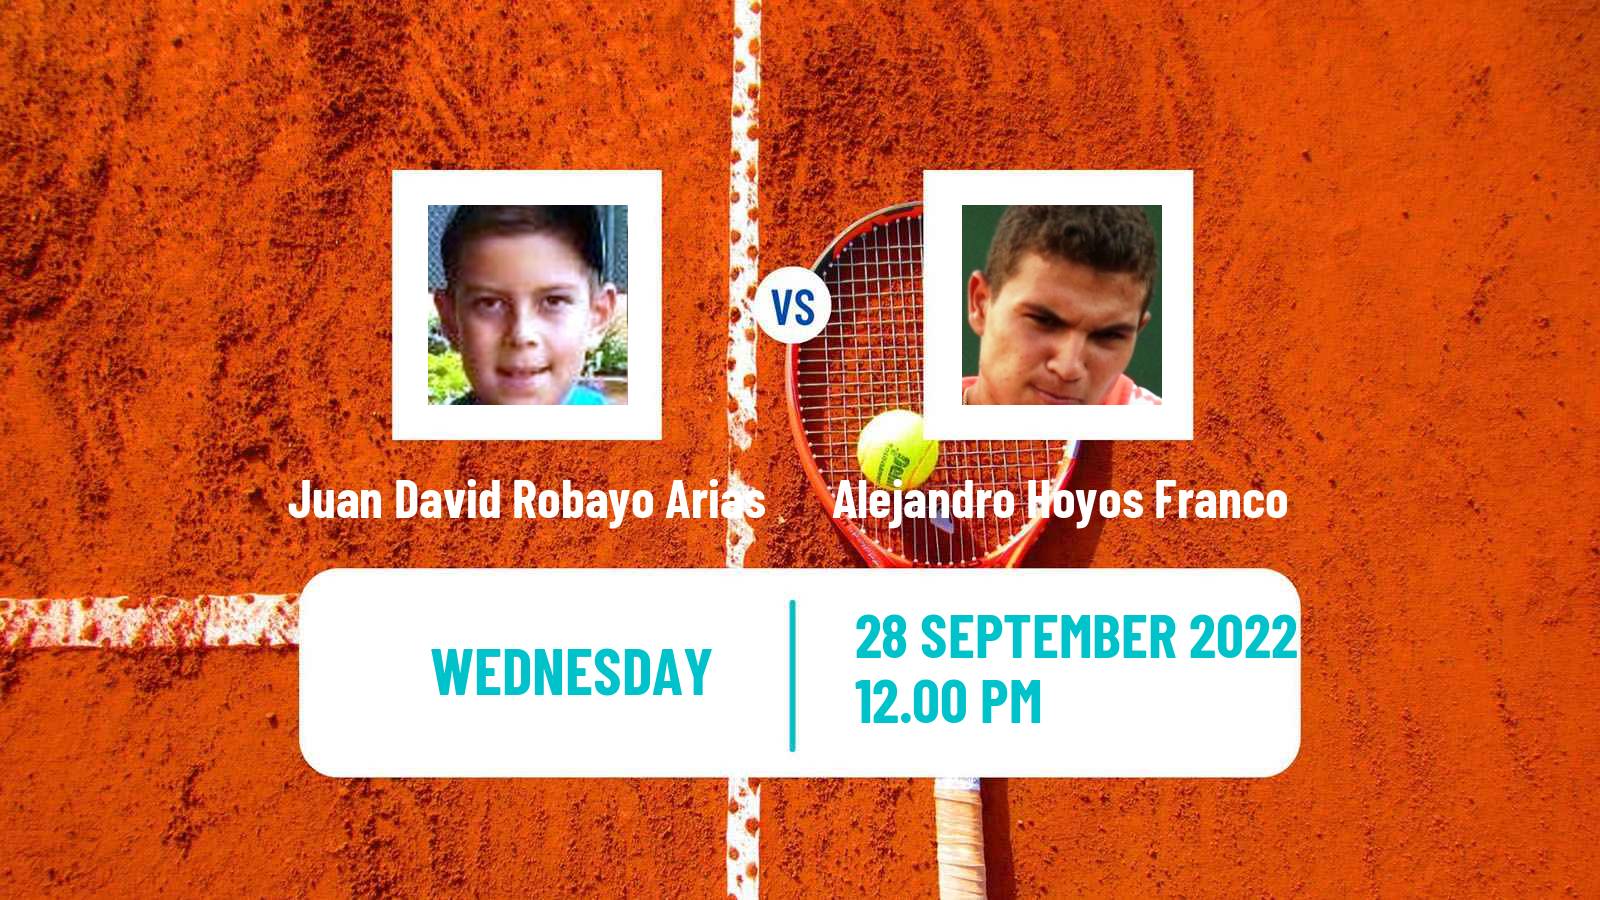 Tennis ITF Tournaments Juan David Robayo Arias - Alejandro Hoyos Franco